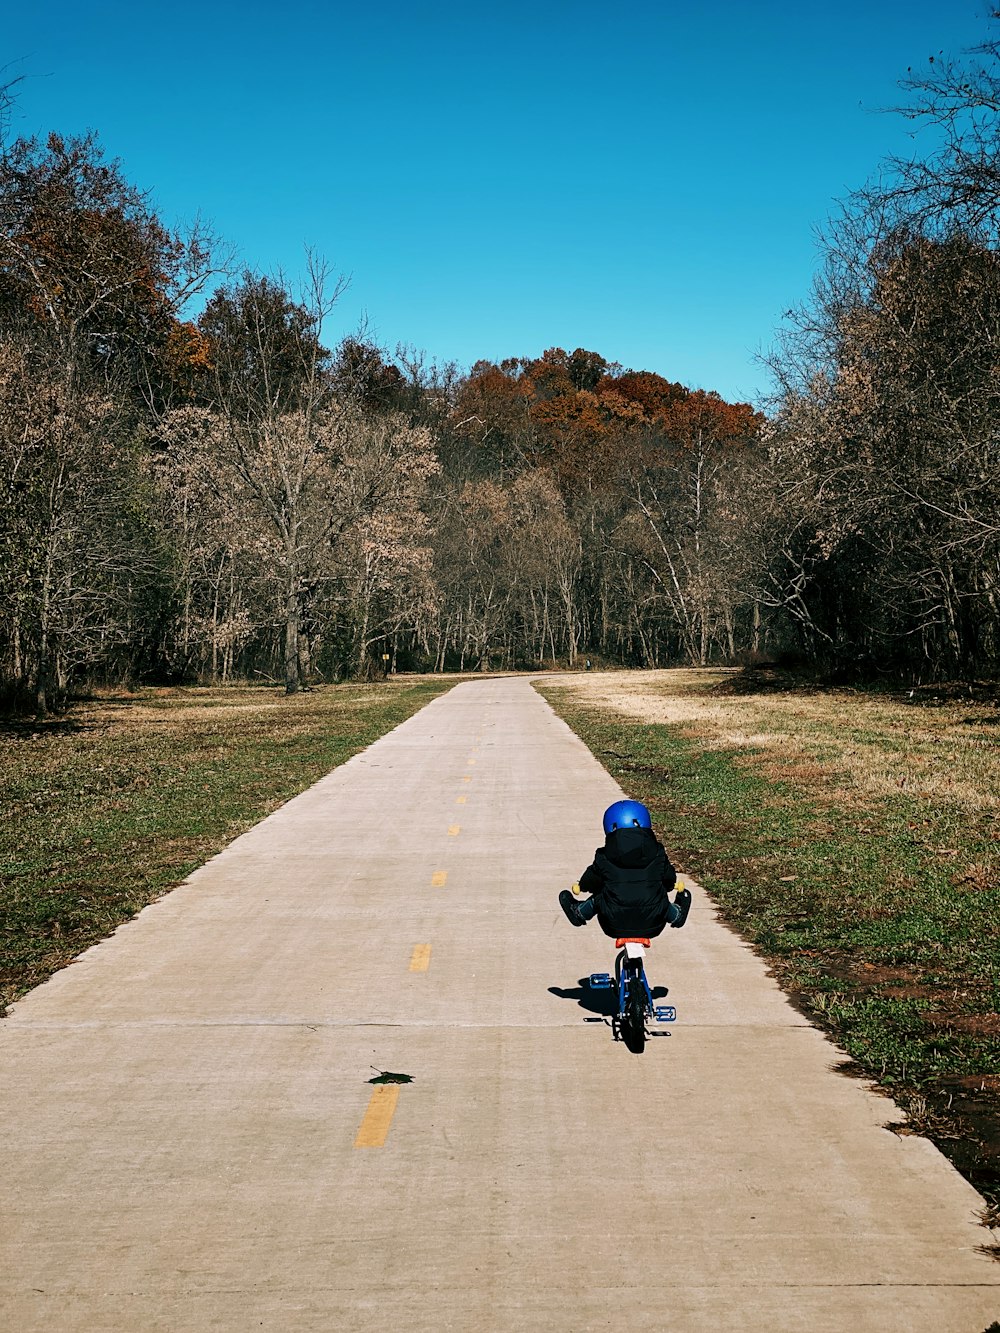 child biking on road near green field during daytime